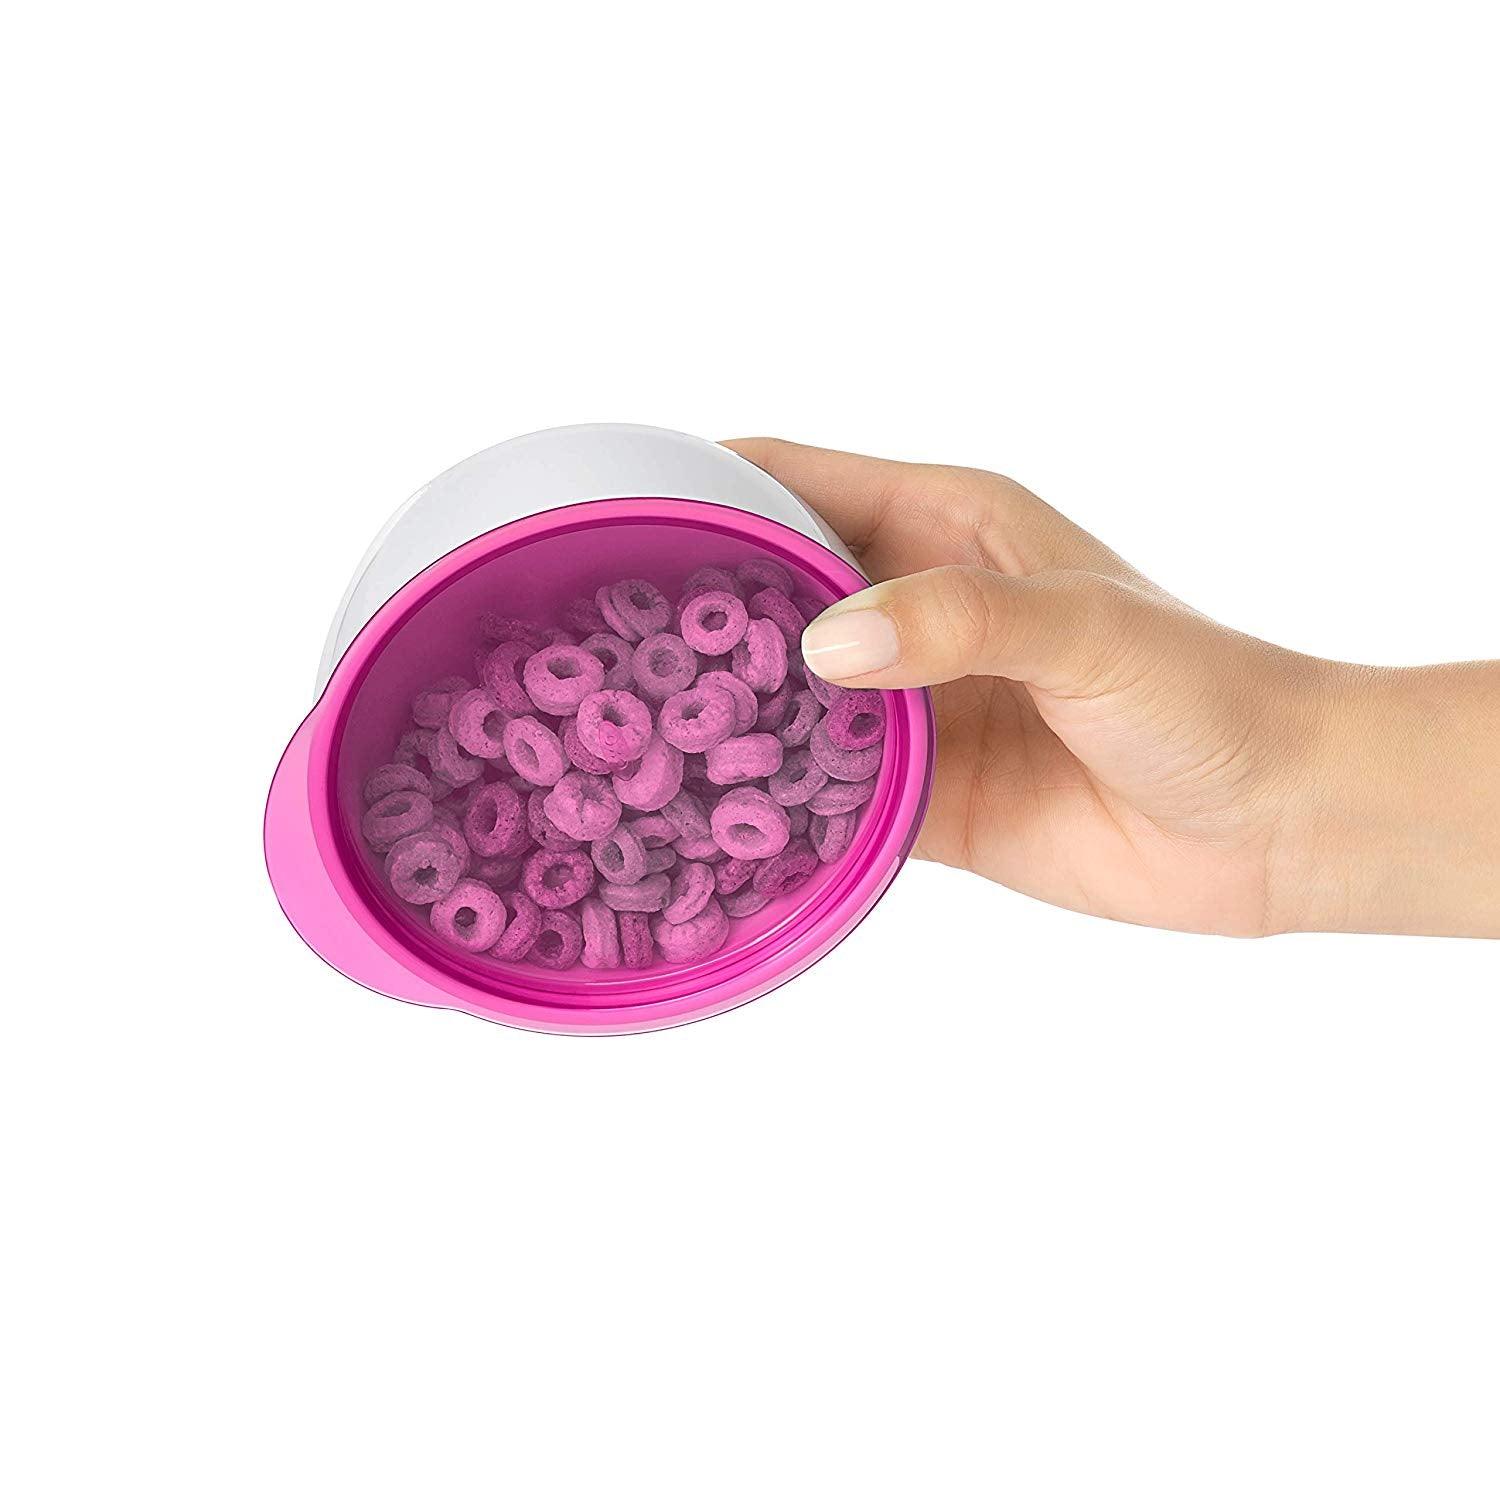 OXO Tot Small & Large Bowl Set - Pink